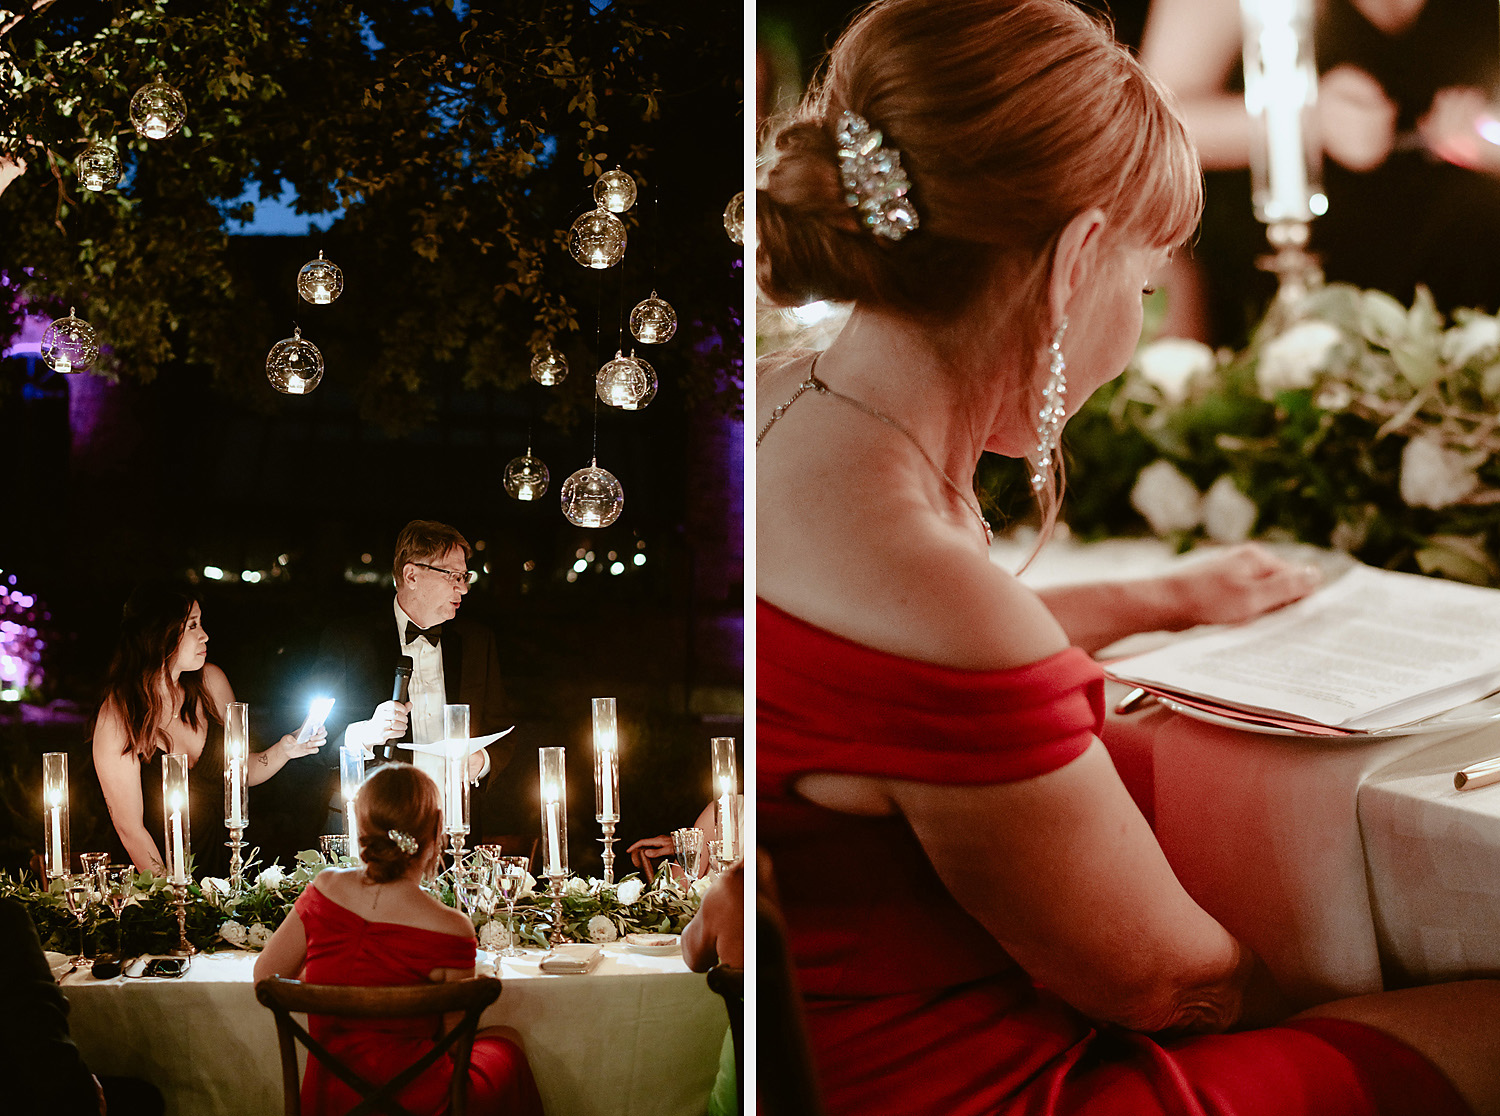 editiorial intimate micro wedding in tuscany alfresco dinner reception outdoor evening